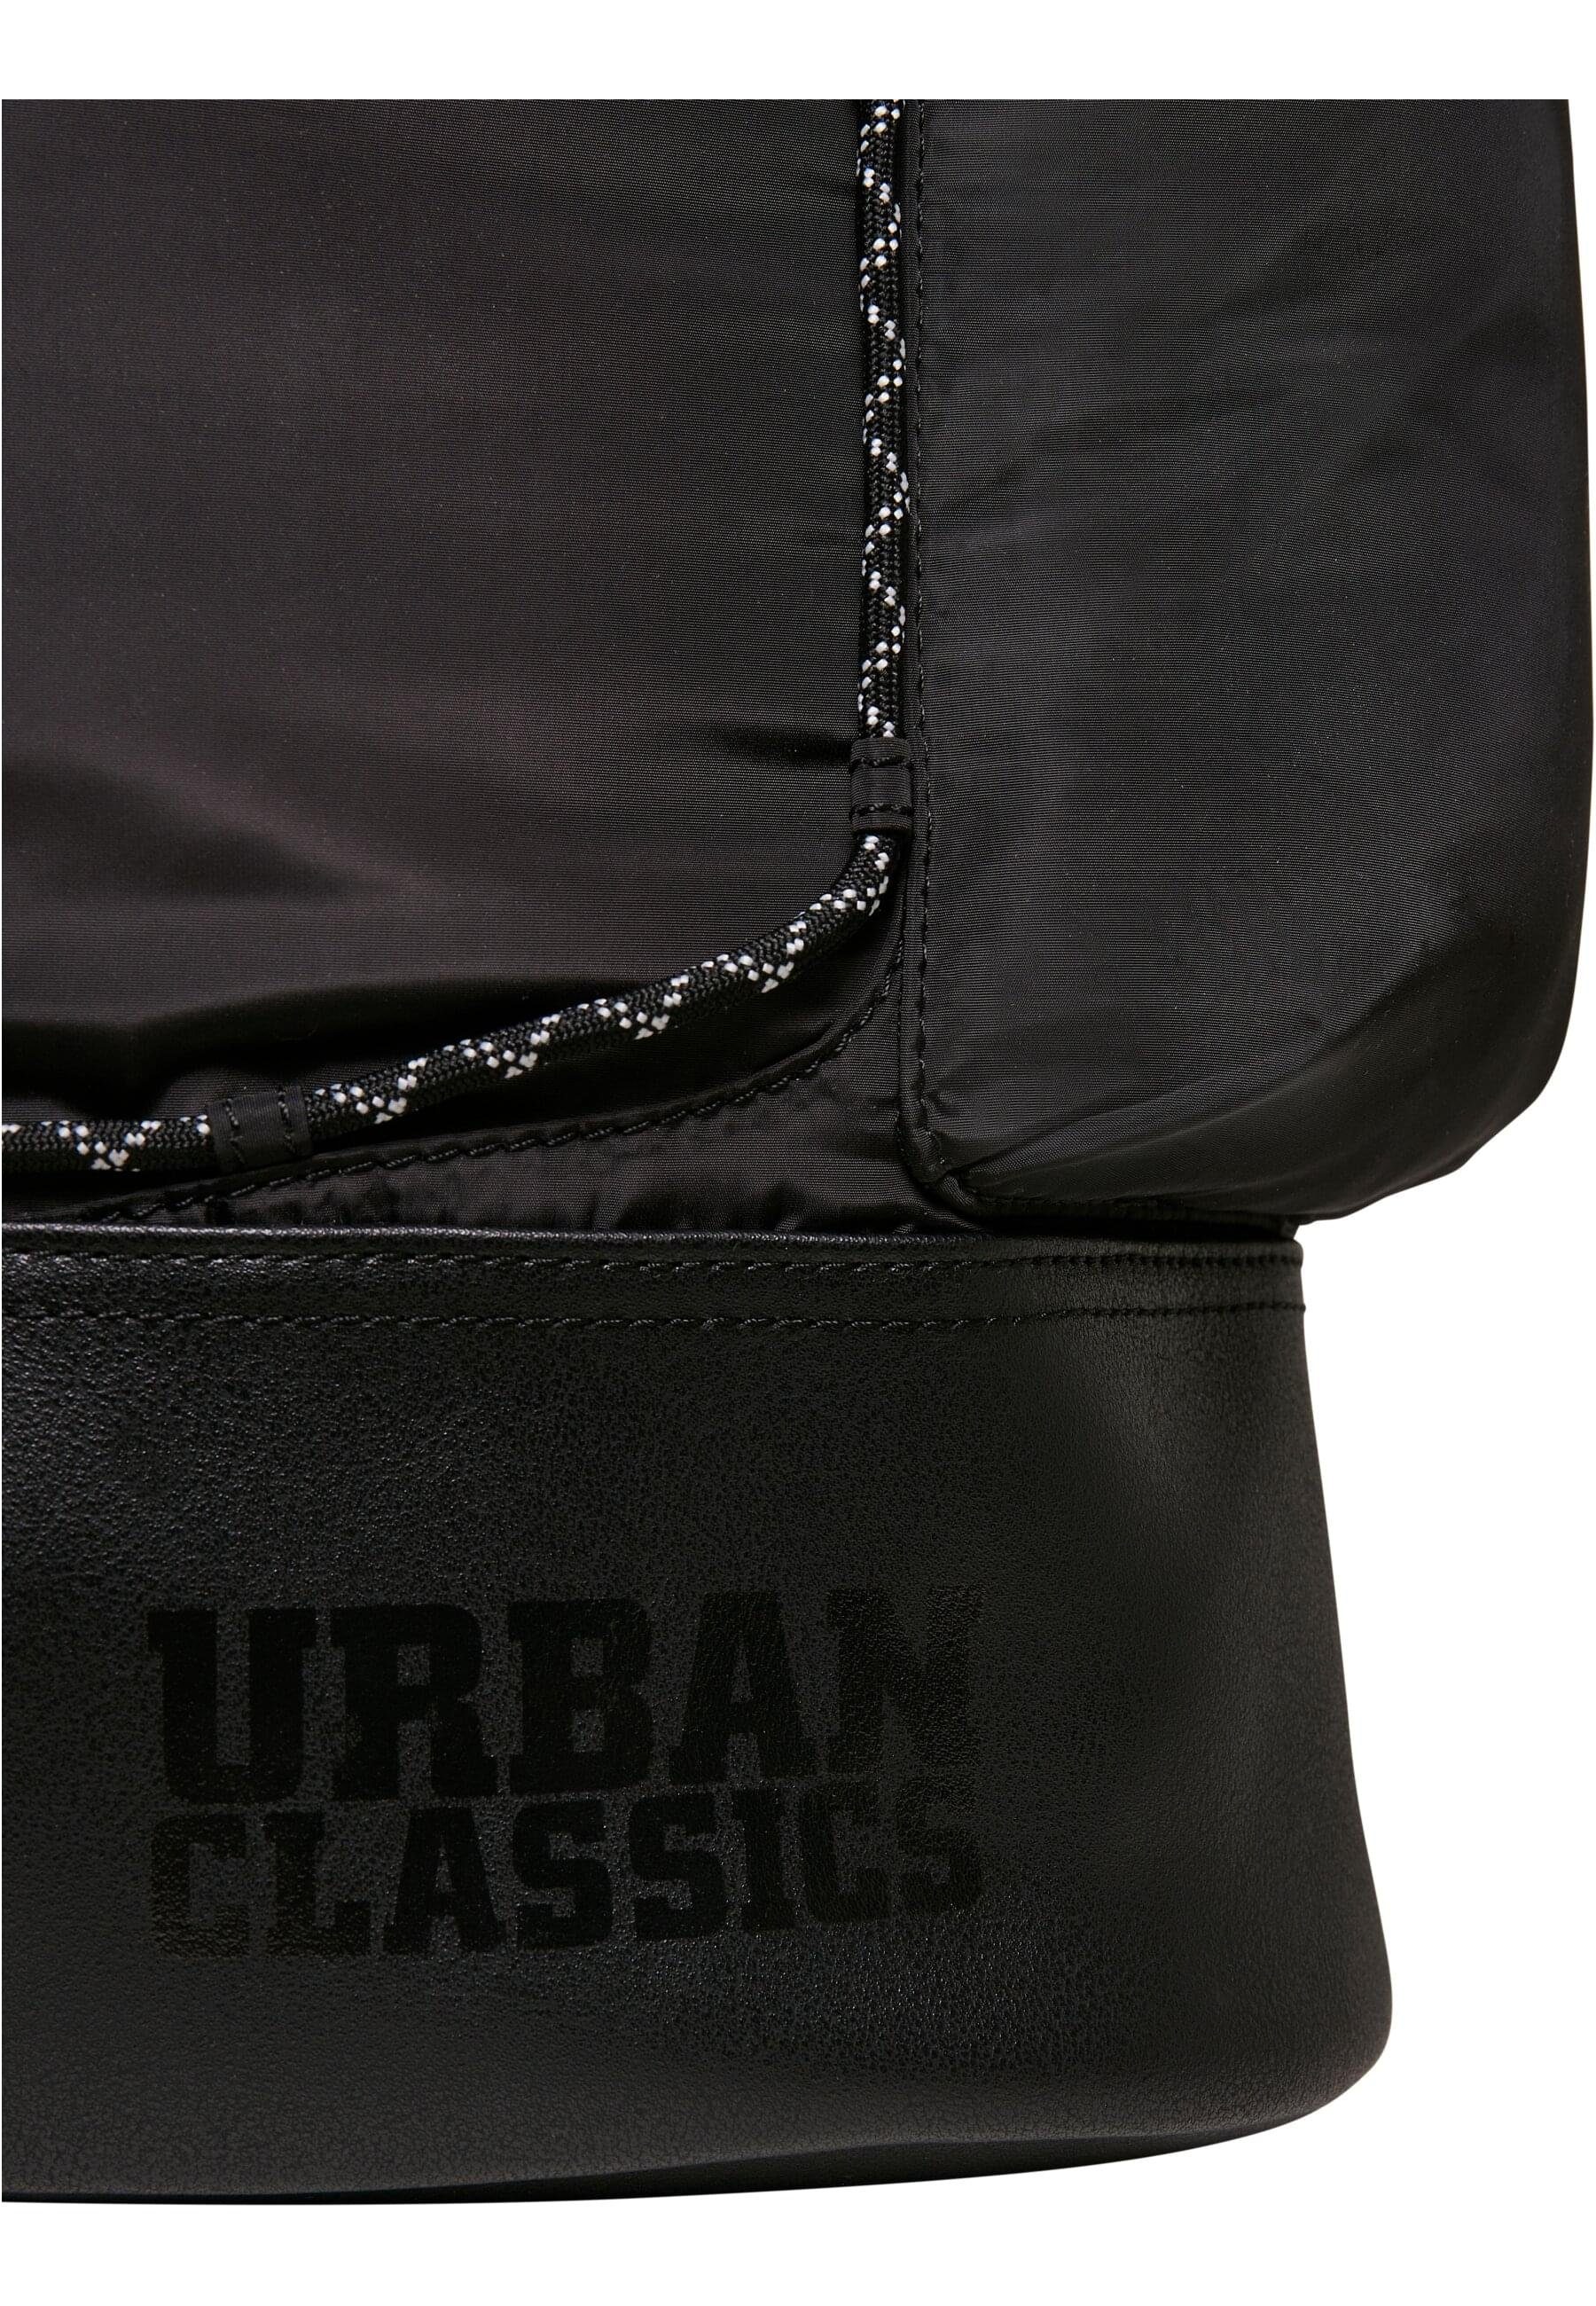 Unisex Backpack Rucksack Weight URBAN Hiking Light CLASSICS